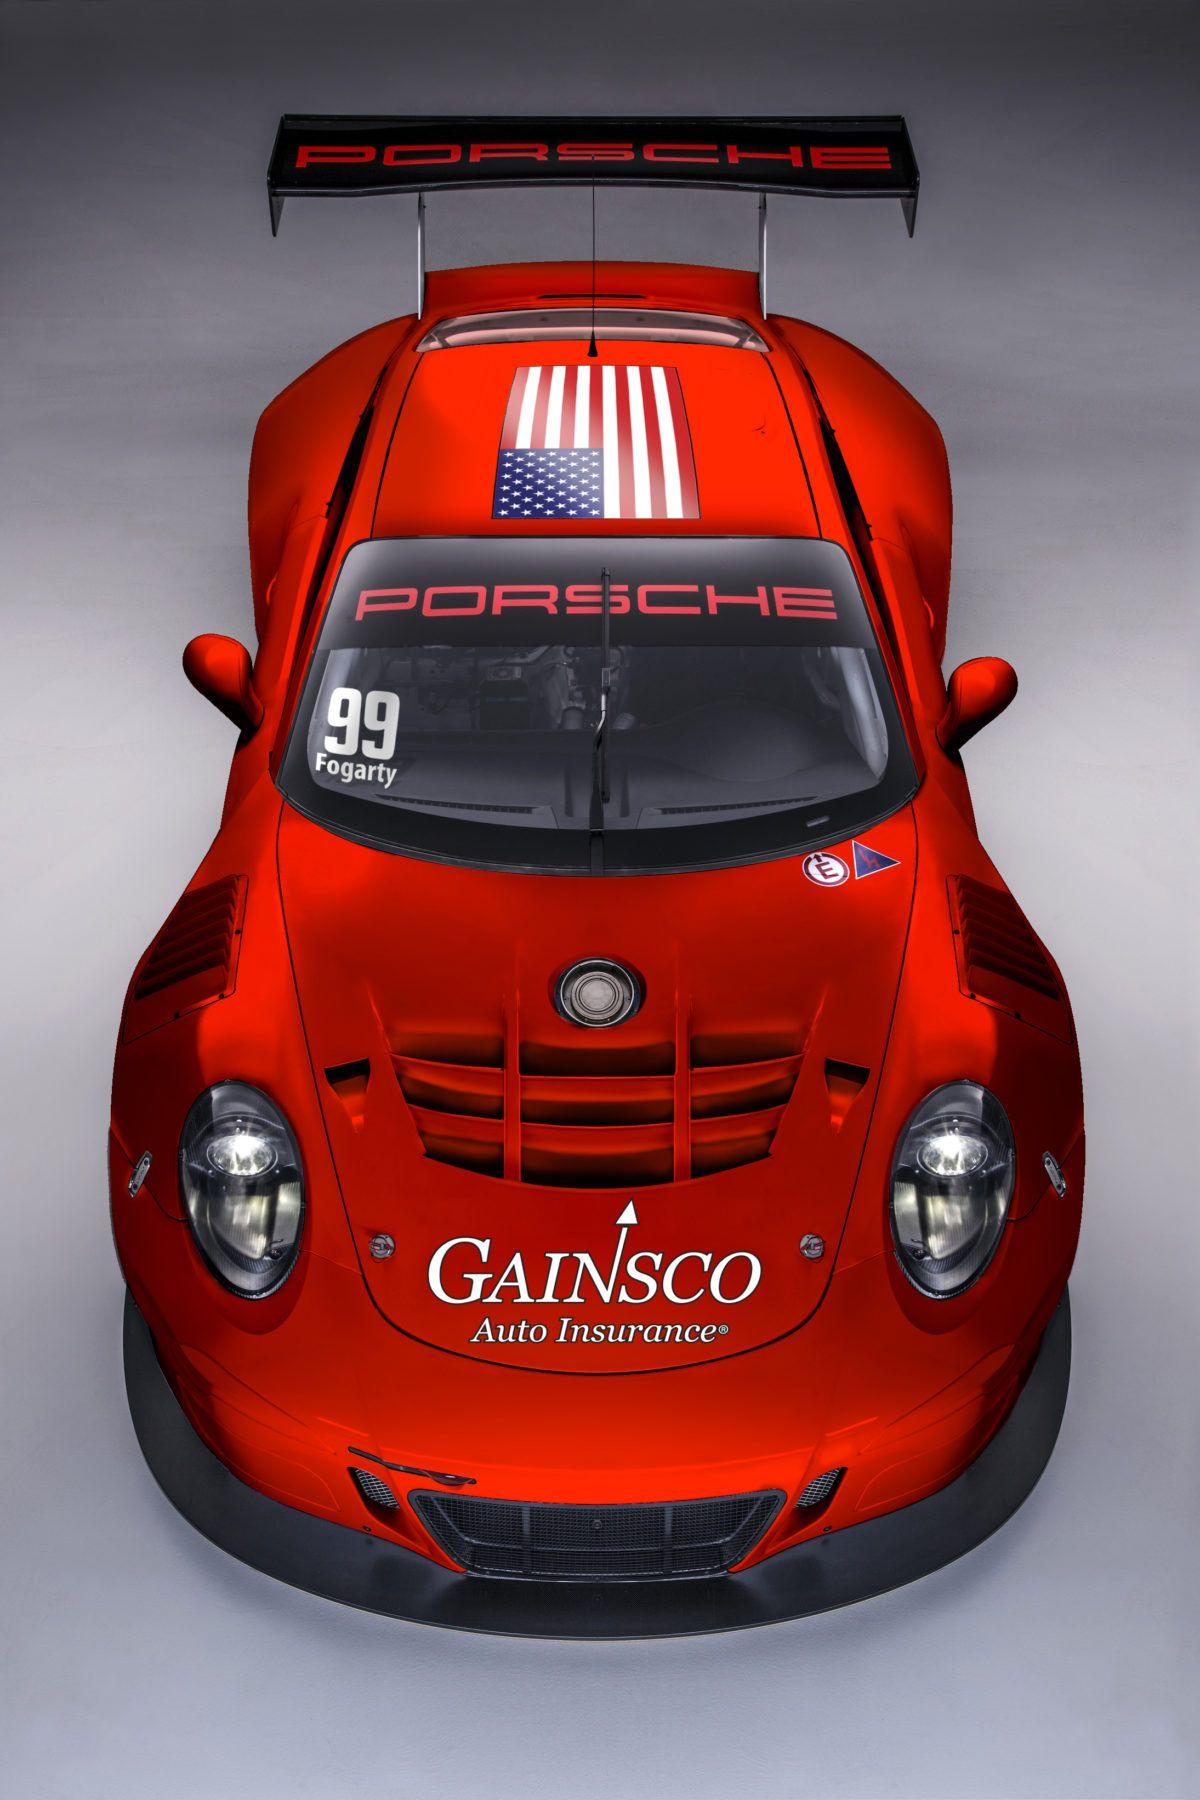 Gainsco Logo - GAINSCO Switches to Porsche for 2017 - GAINSCO Racing